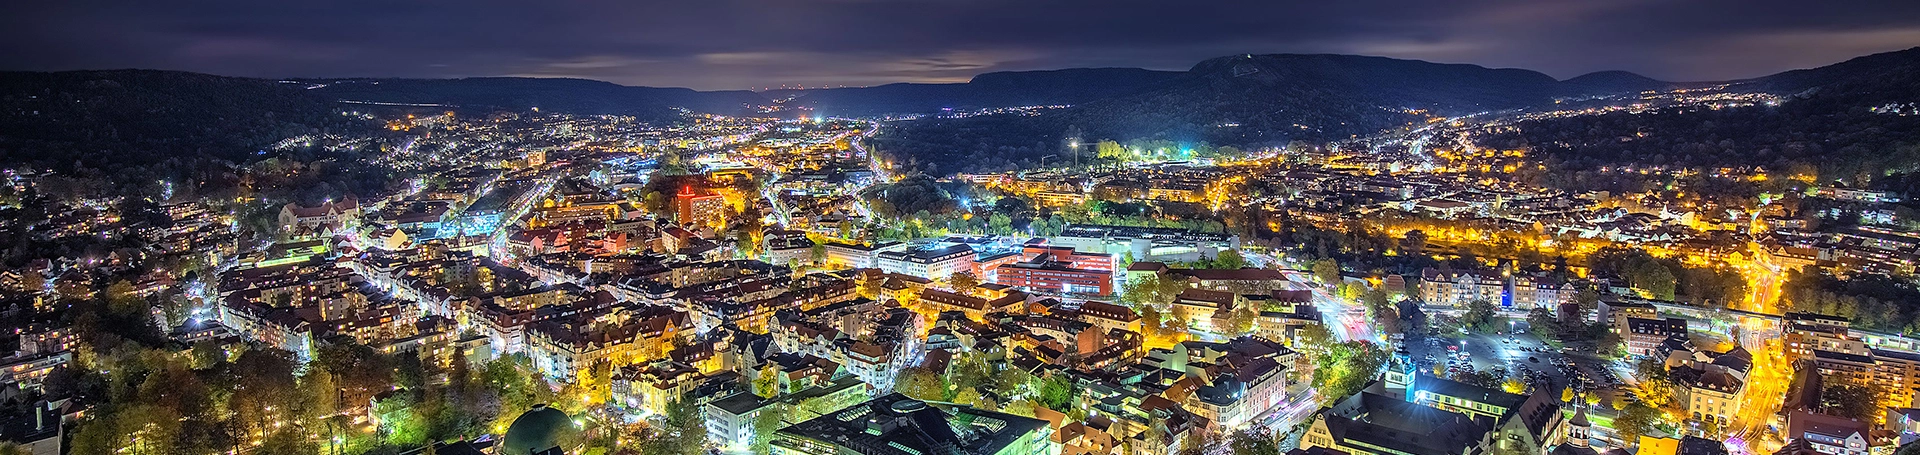 Jenas Innenstadt bei Nacht - Blick vom Jentower